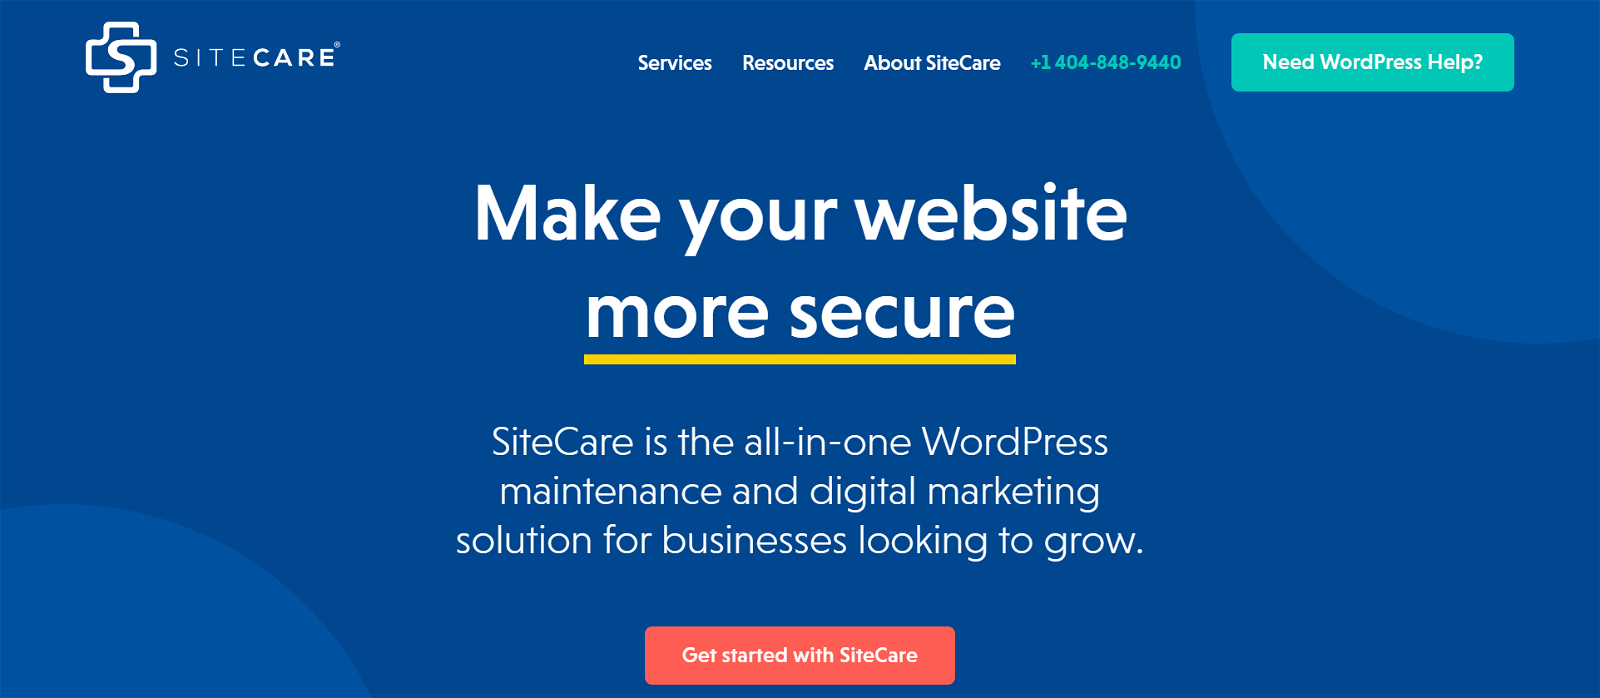 Sitecare WordPress services